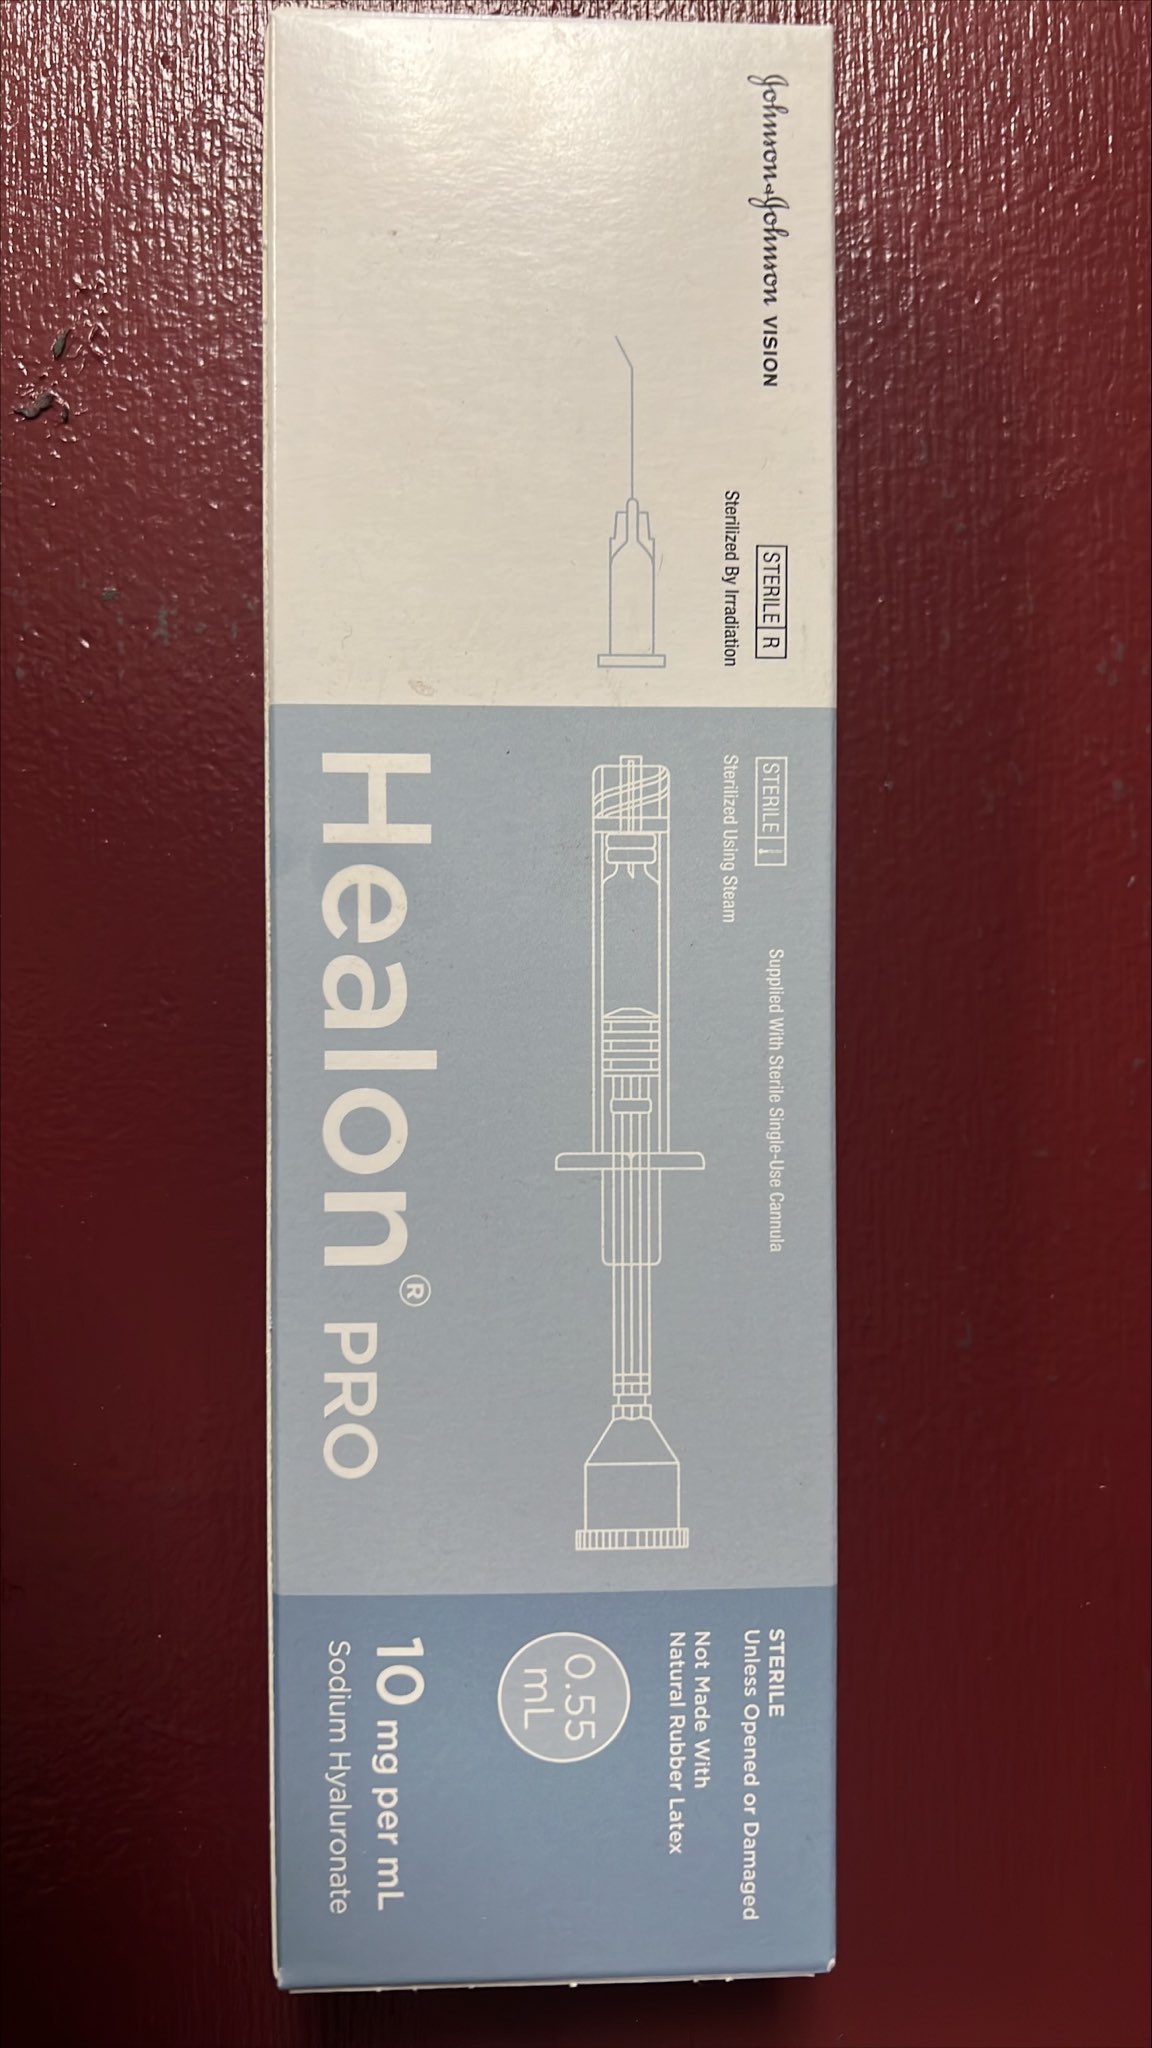 Rx Item-Healon Pro 0.55 ML SYG-KEEP REFRIG- by Advanced Medical Optics-Healon US